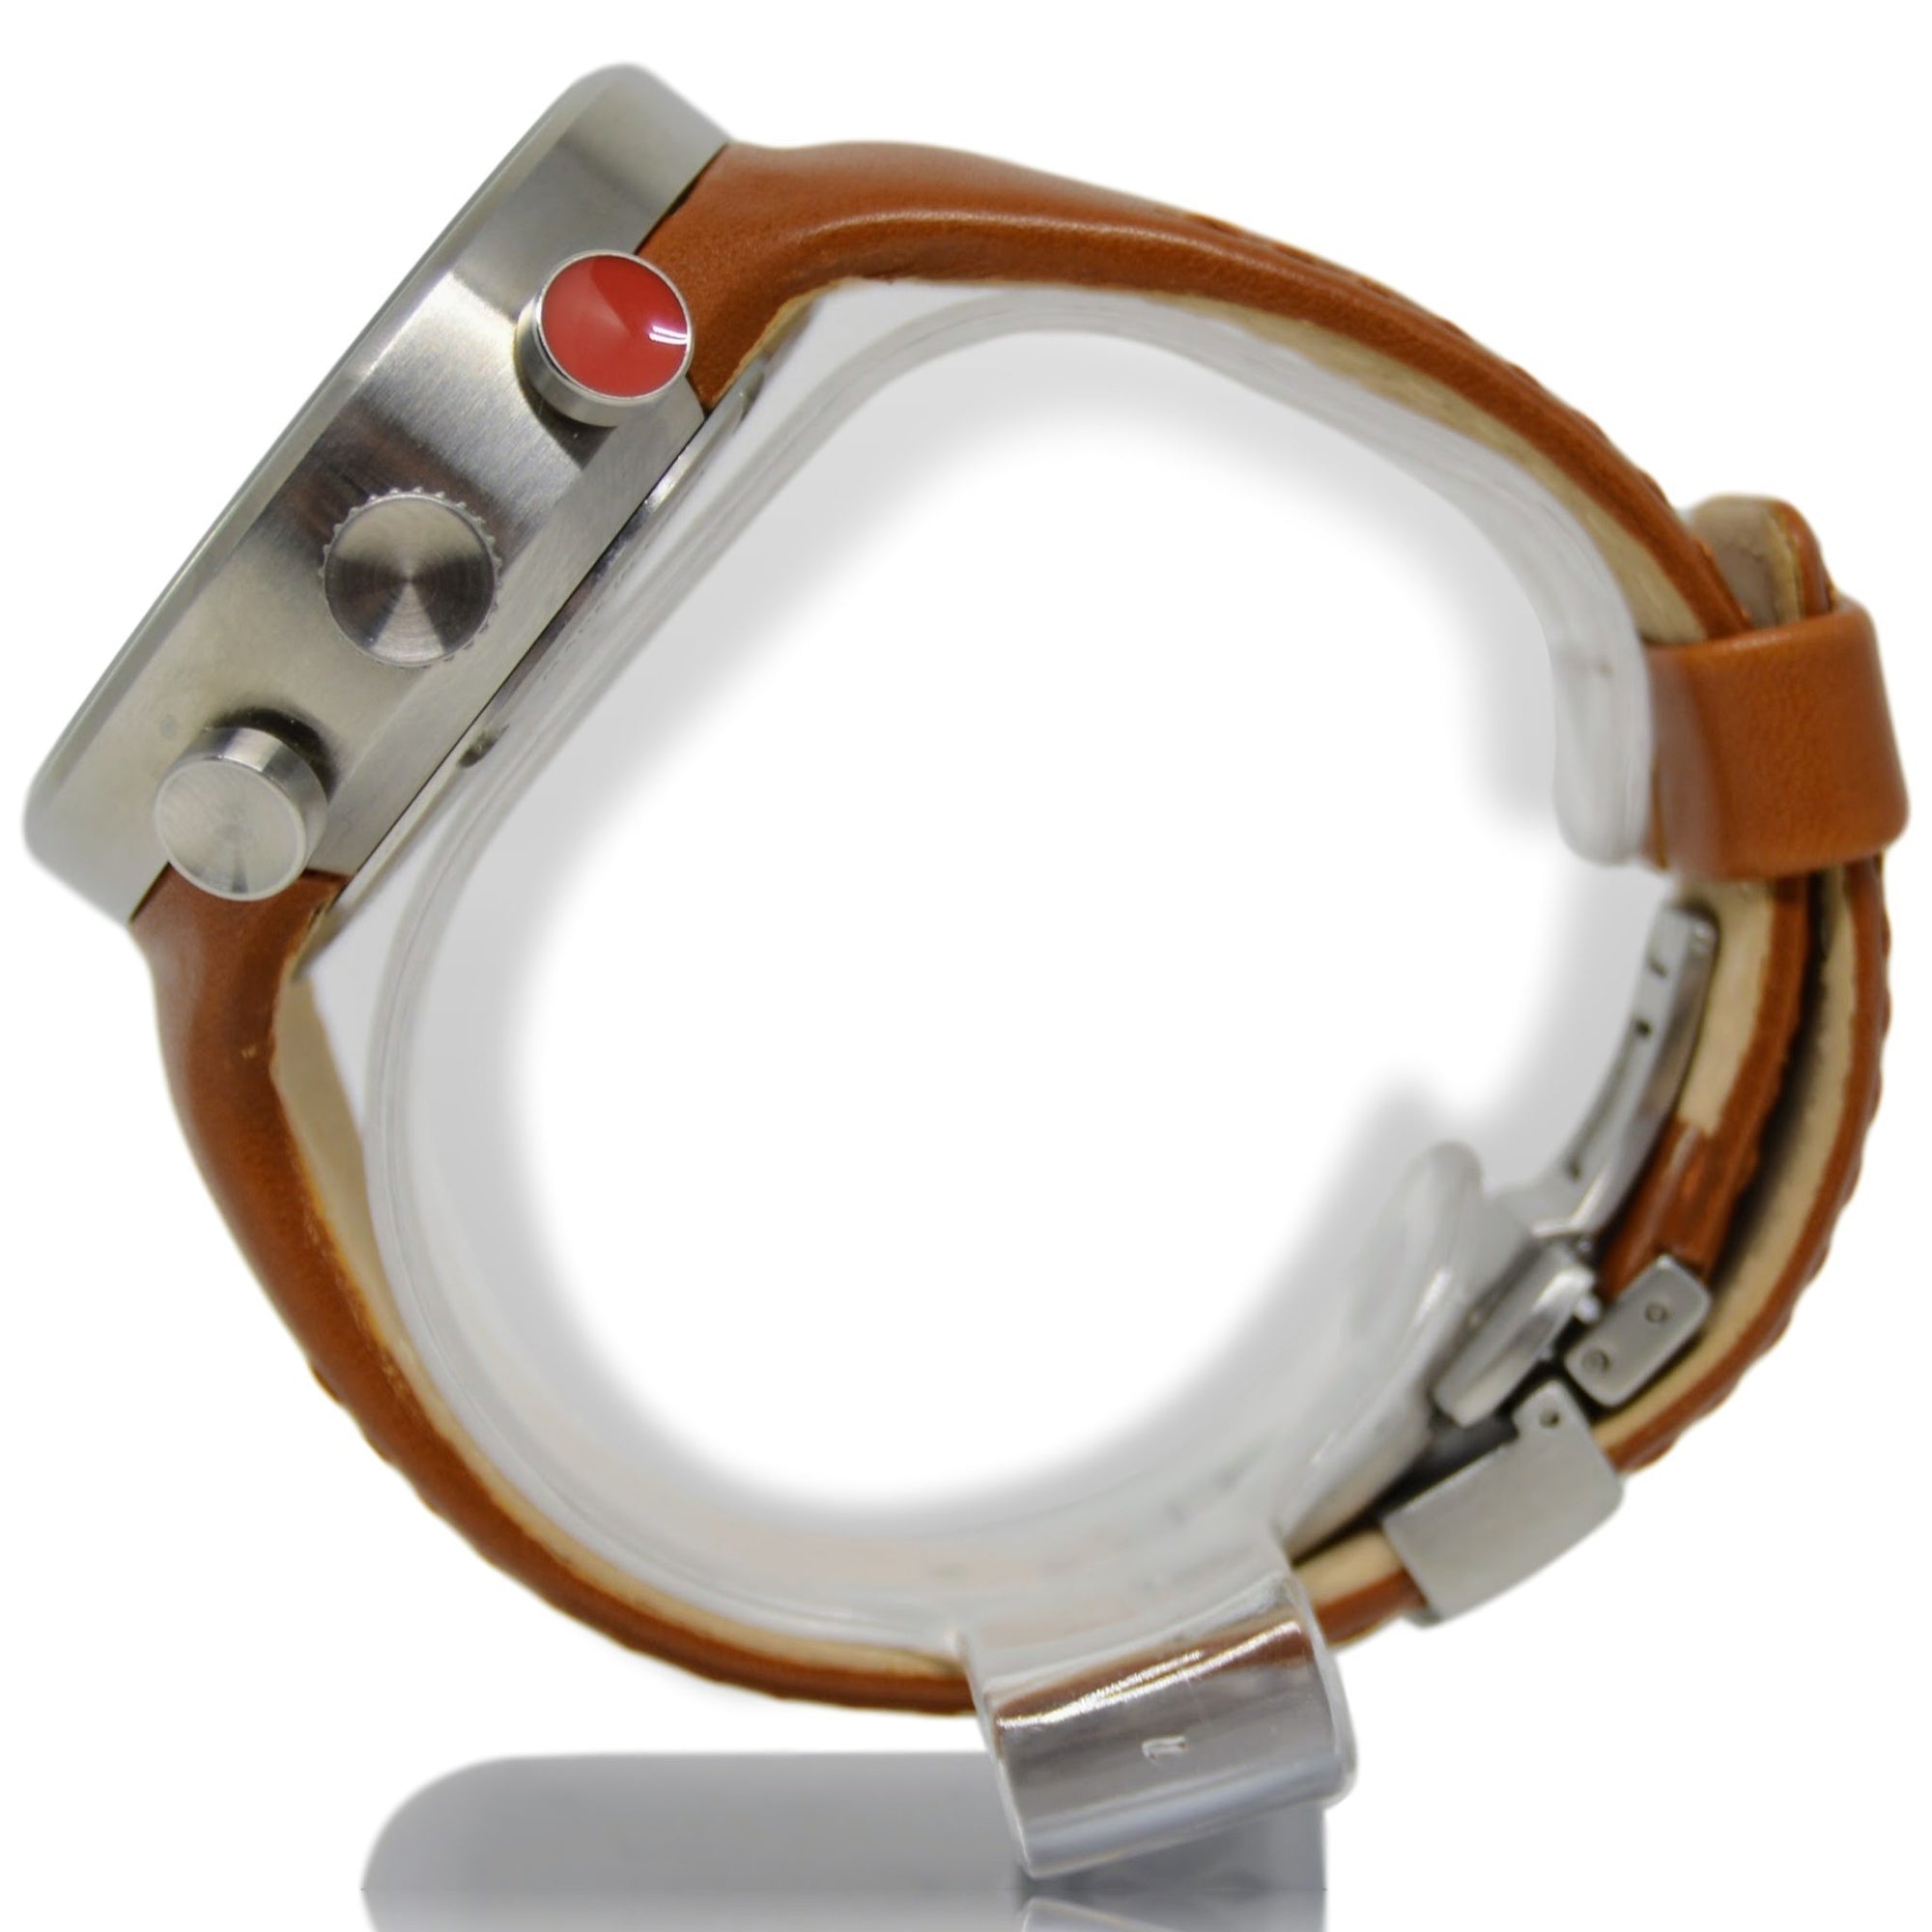 Nike Heritage Alarm Chrono Tan Leather Watch WC0054-251 | Rare Find | - Elevn:59